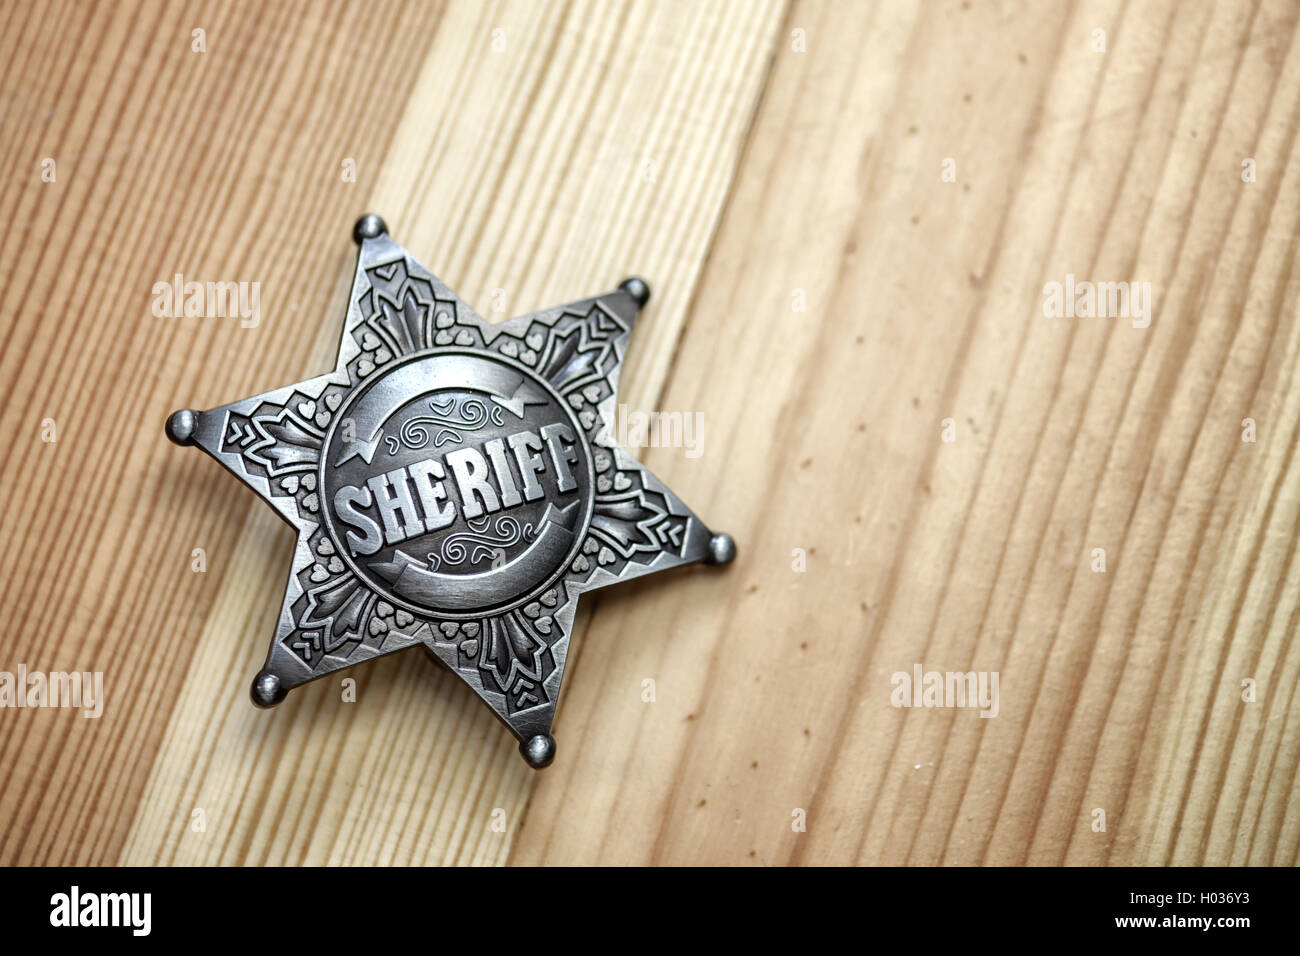 sheriff star on wood table closeup Stock Photo